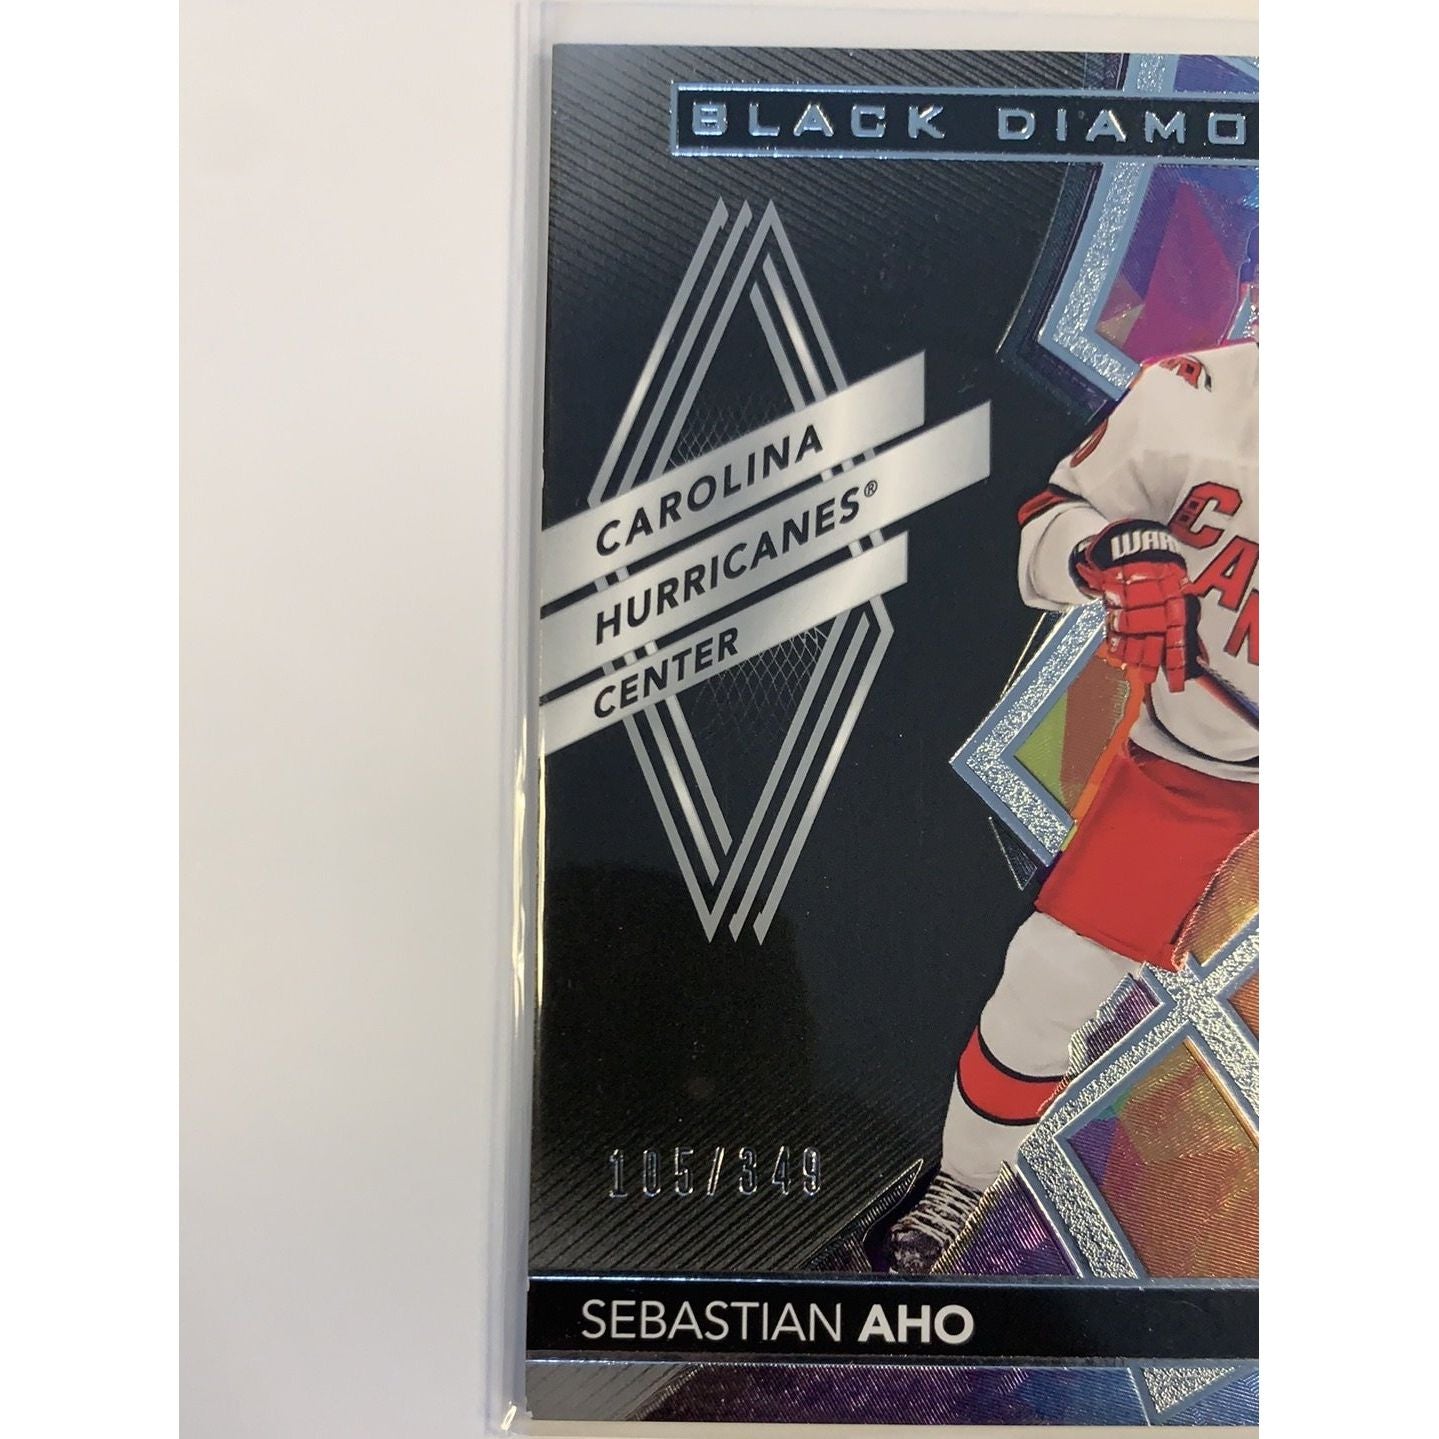  2020-21 Black Diamond Sebastian Aho /349  Local Legends Cards & Collectibles